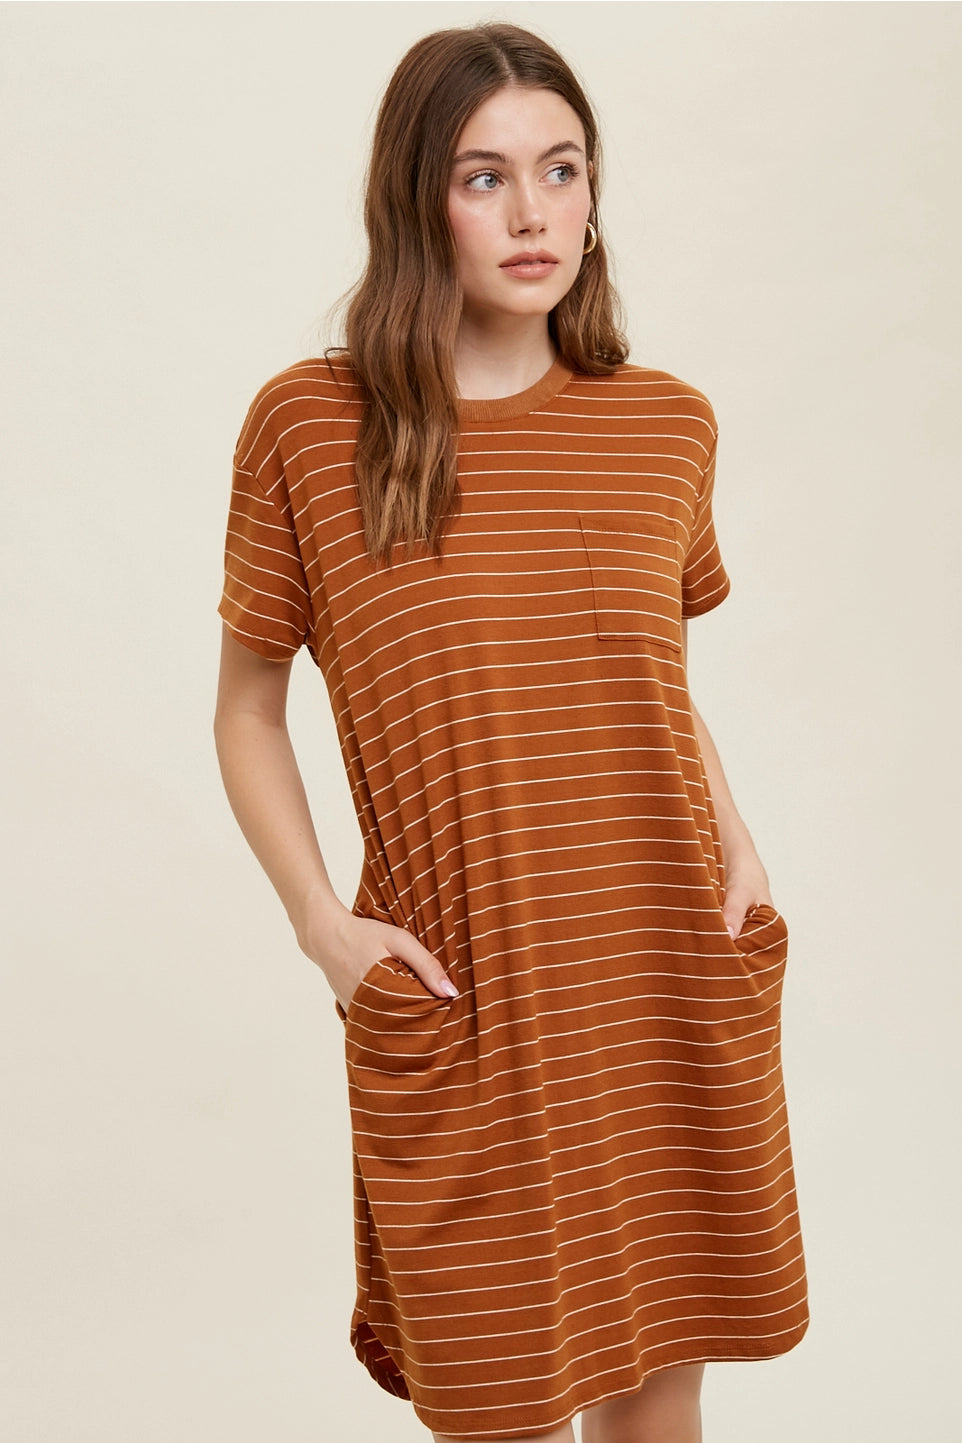 Doniphan Striped T-Shirt Dress